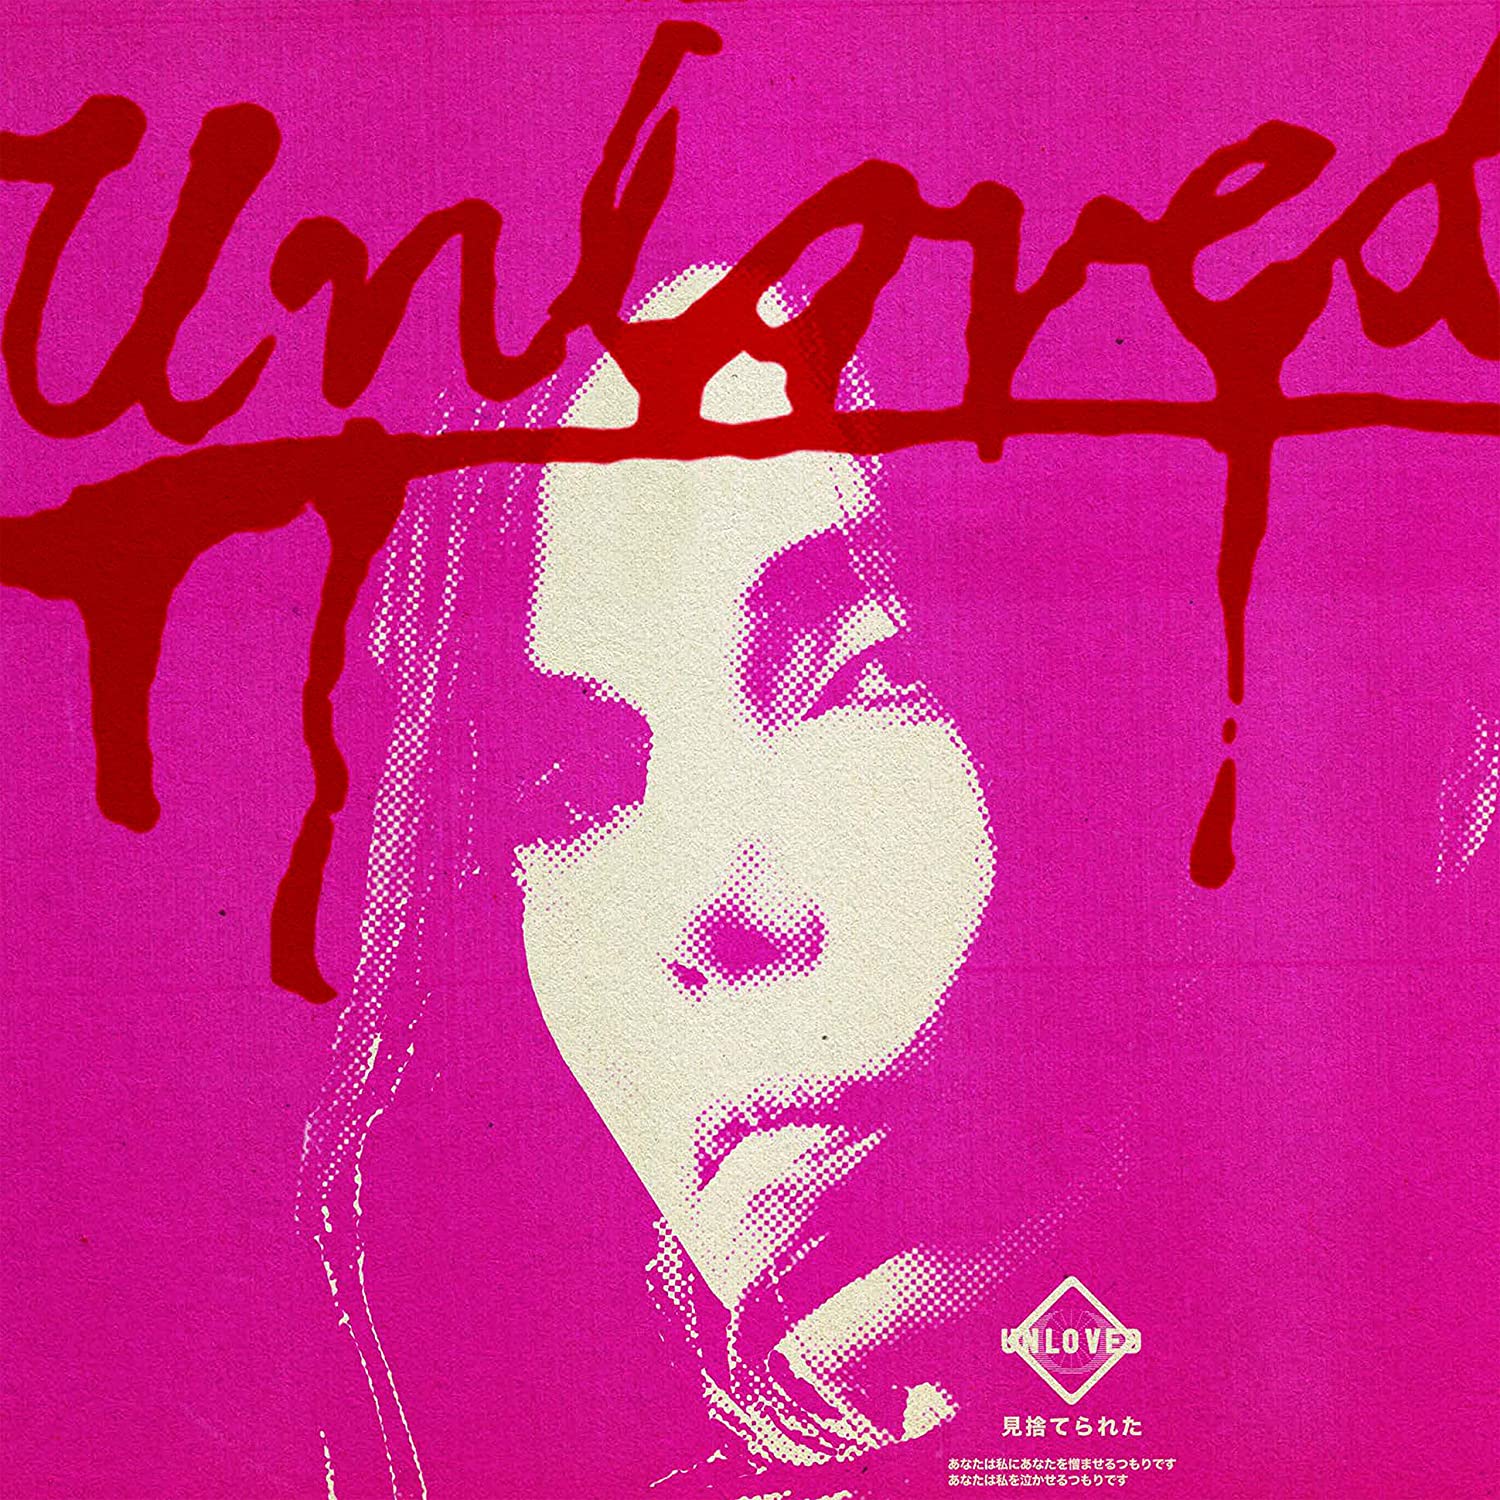 Review: Unloved - The Pink Album - Musikexpress